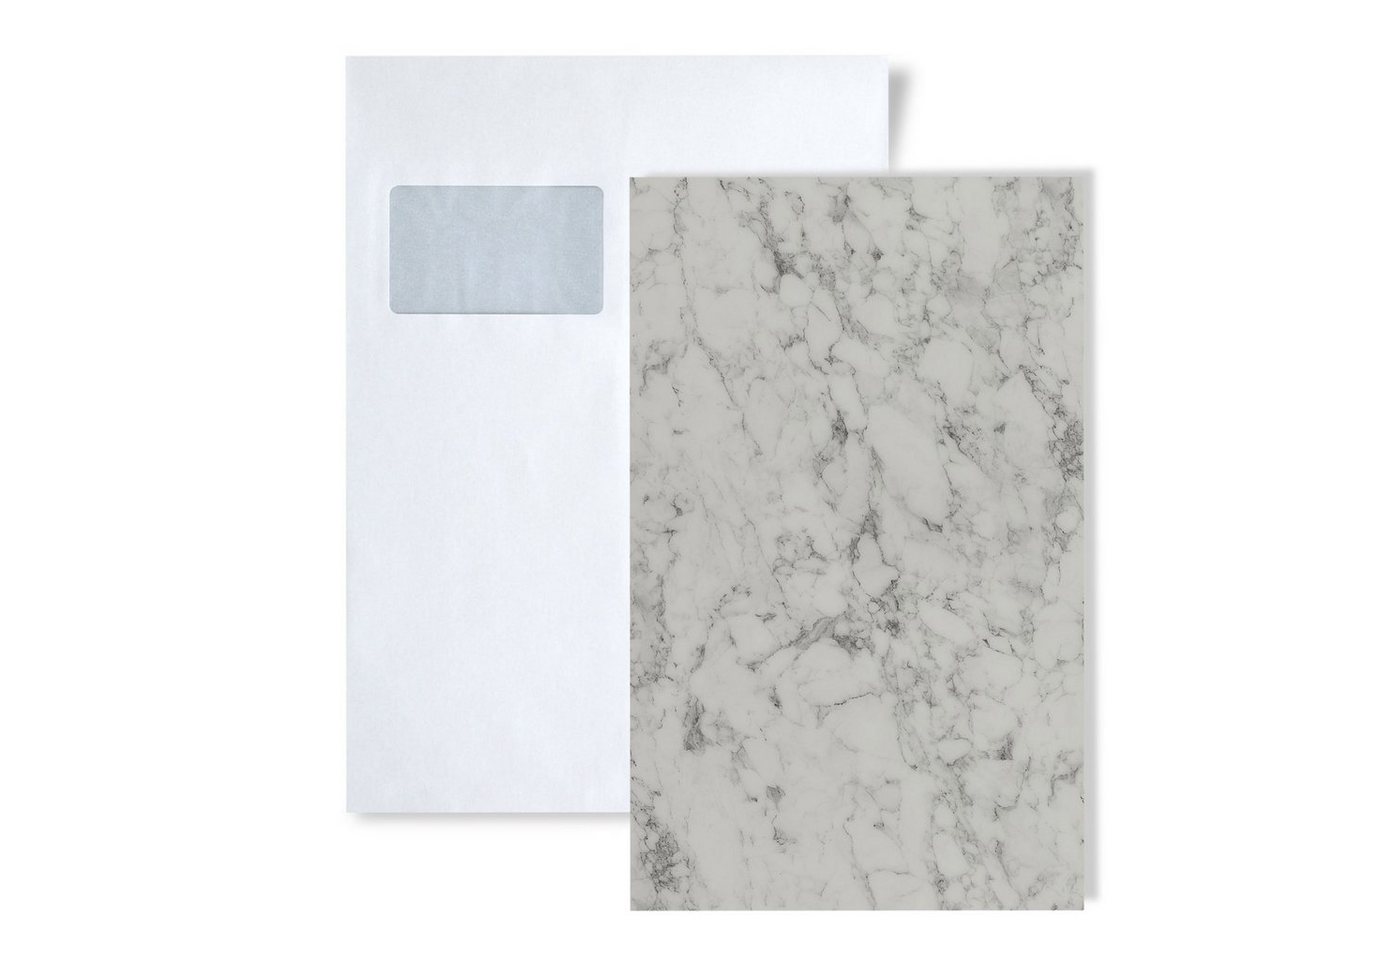 Wallface Dekorpaneele S-19566-NA, BxL: 15x20 cm, (1 MUSTERSTÜCK, Produktmuster, 1-tlg., Muster des Dekorpaneels) weiß, grau-weiß von Wallface